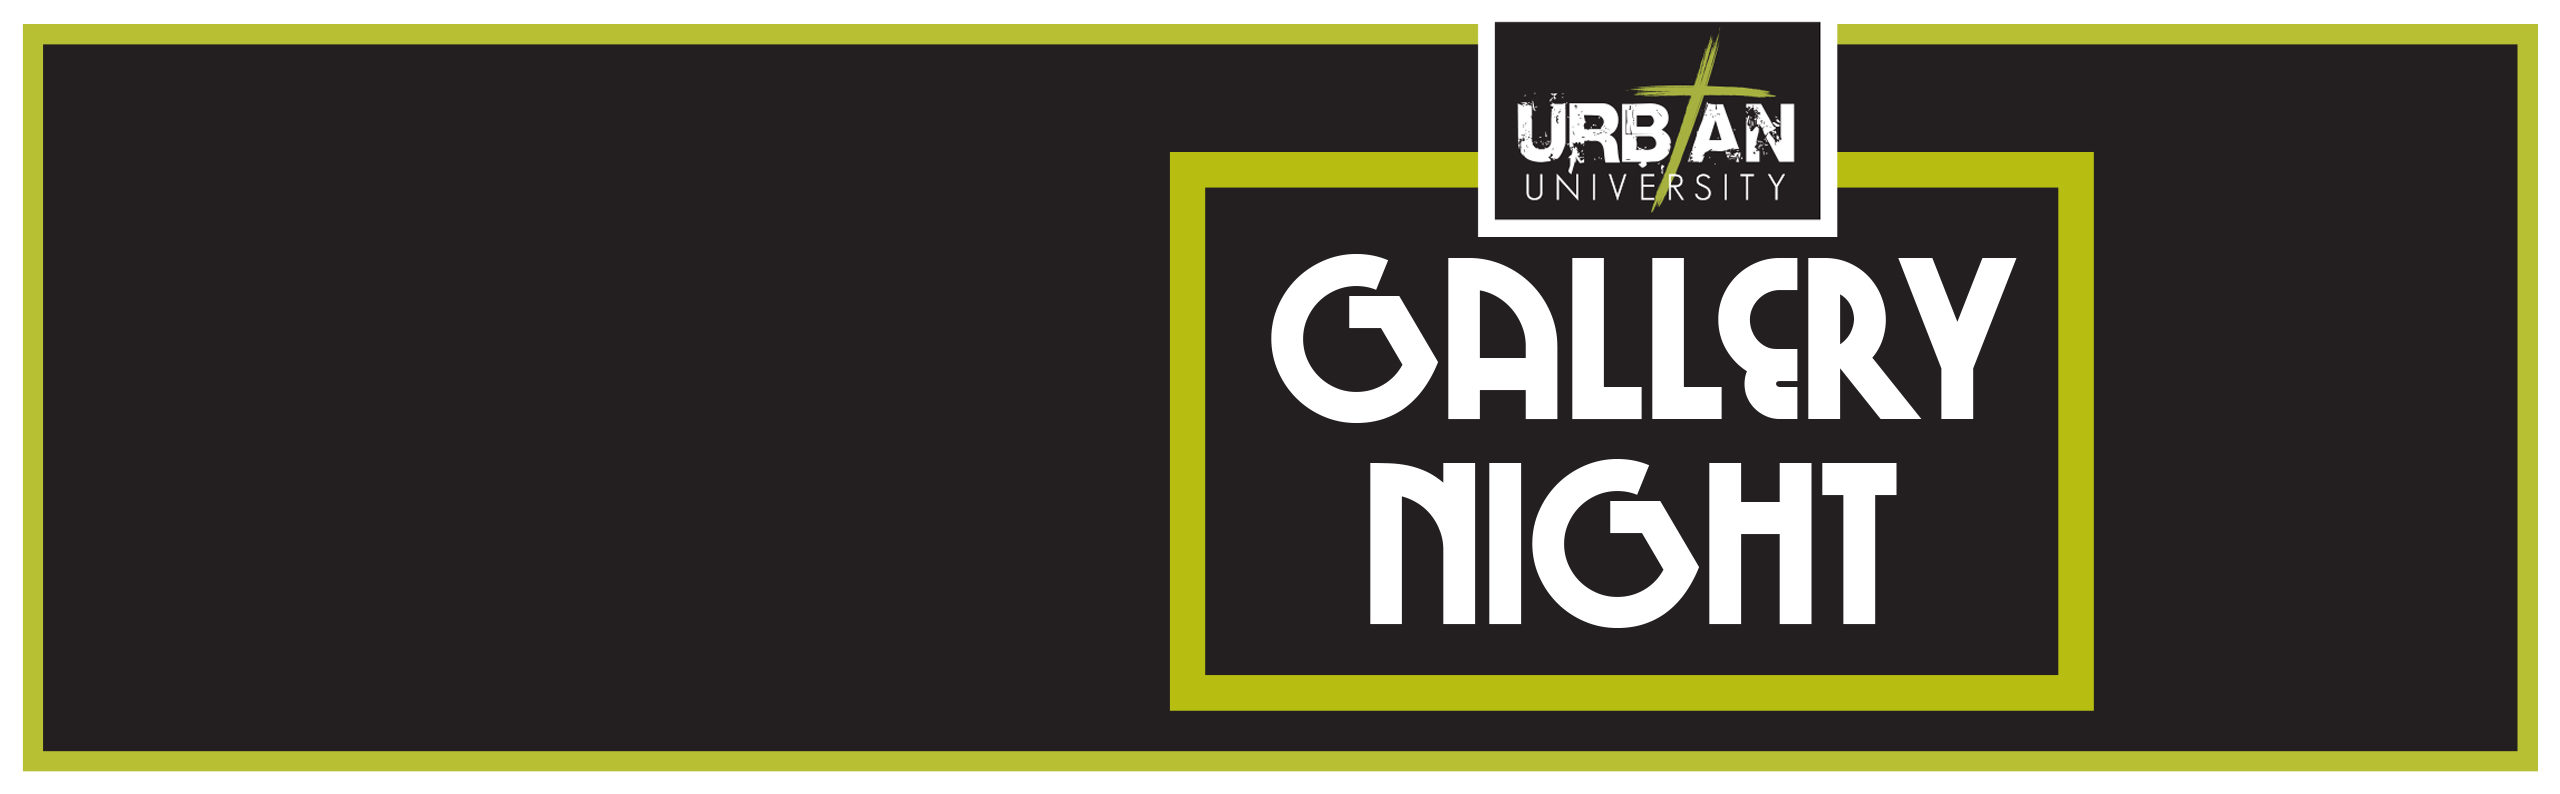 UU Gallery Night Website Banner